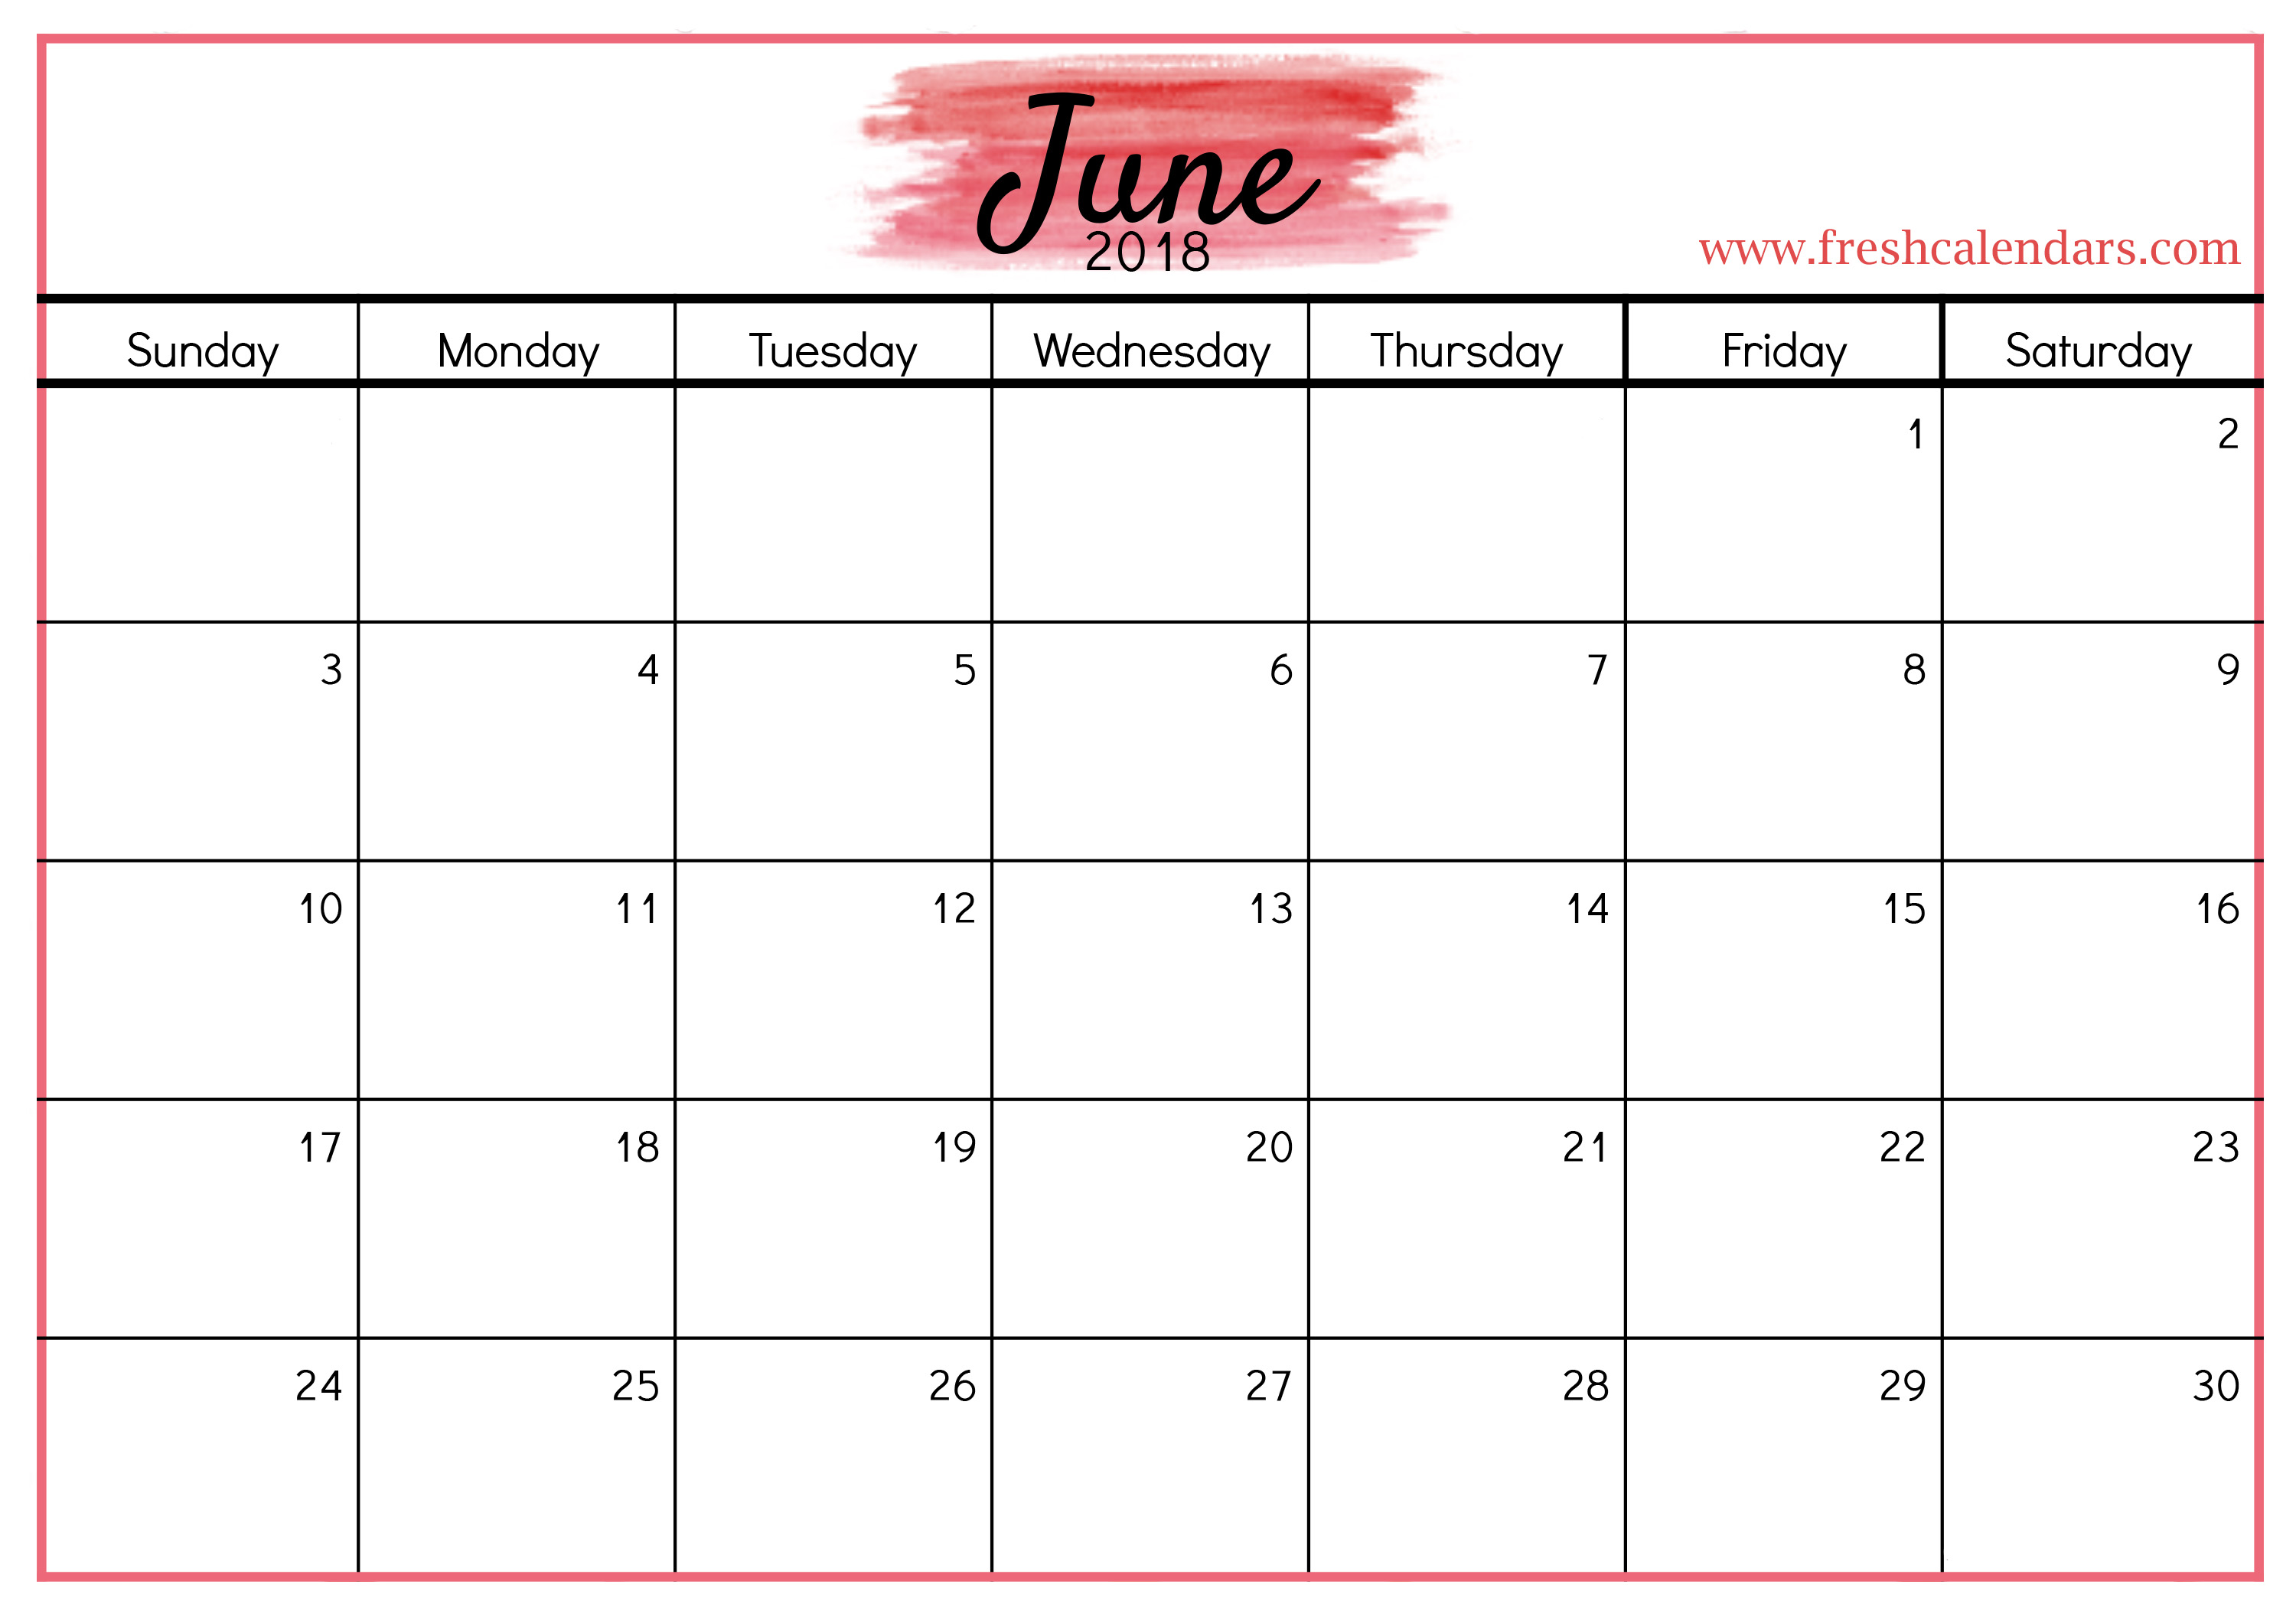 june-2018-calendar-printable-with-holidays-whatisthedatetoday-com